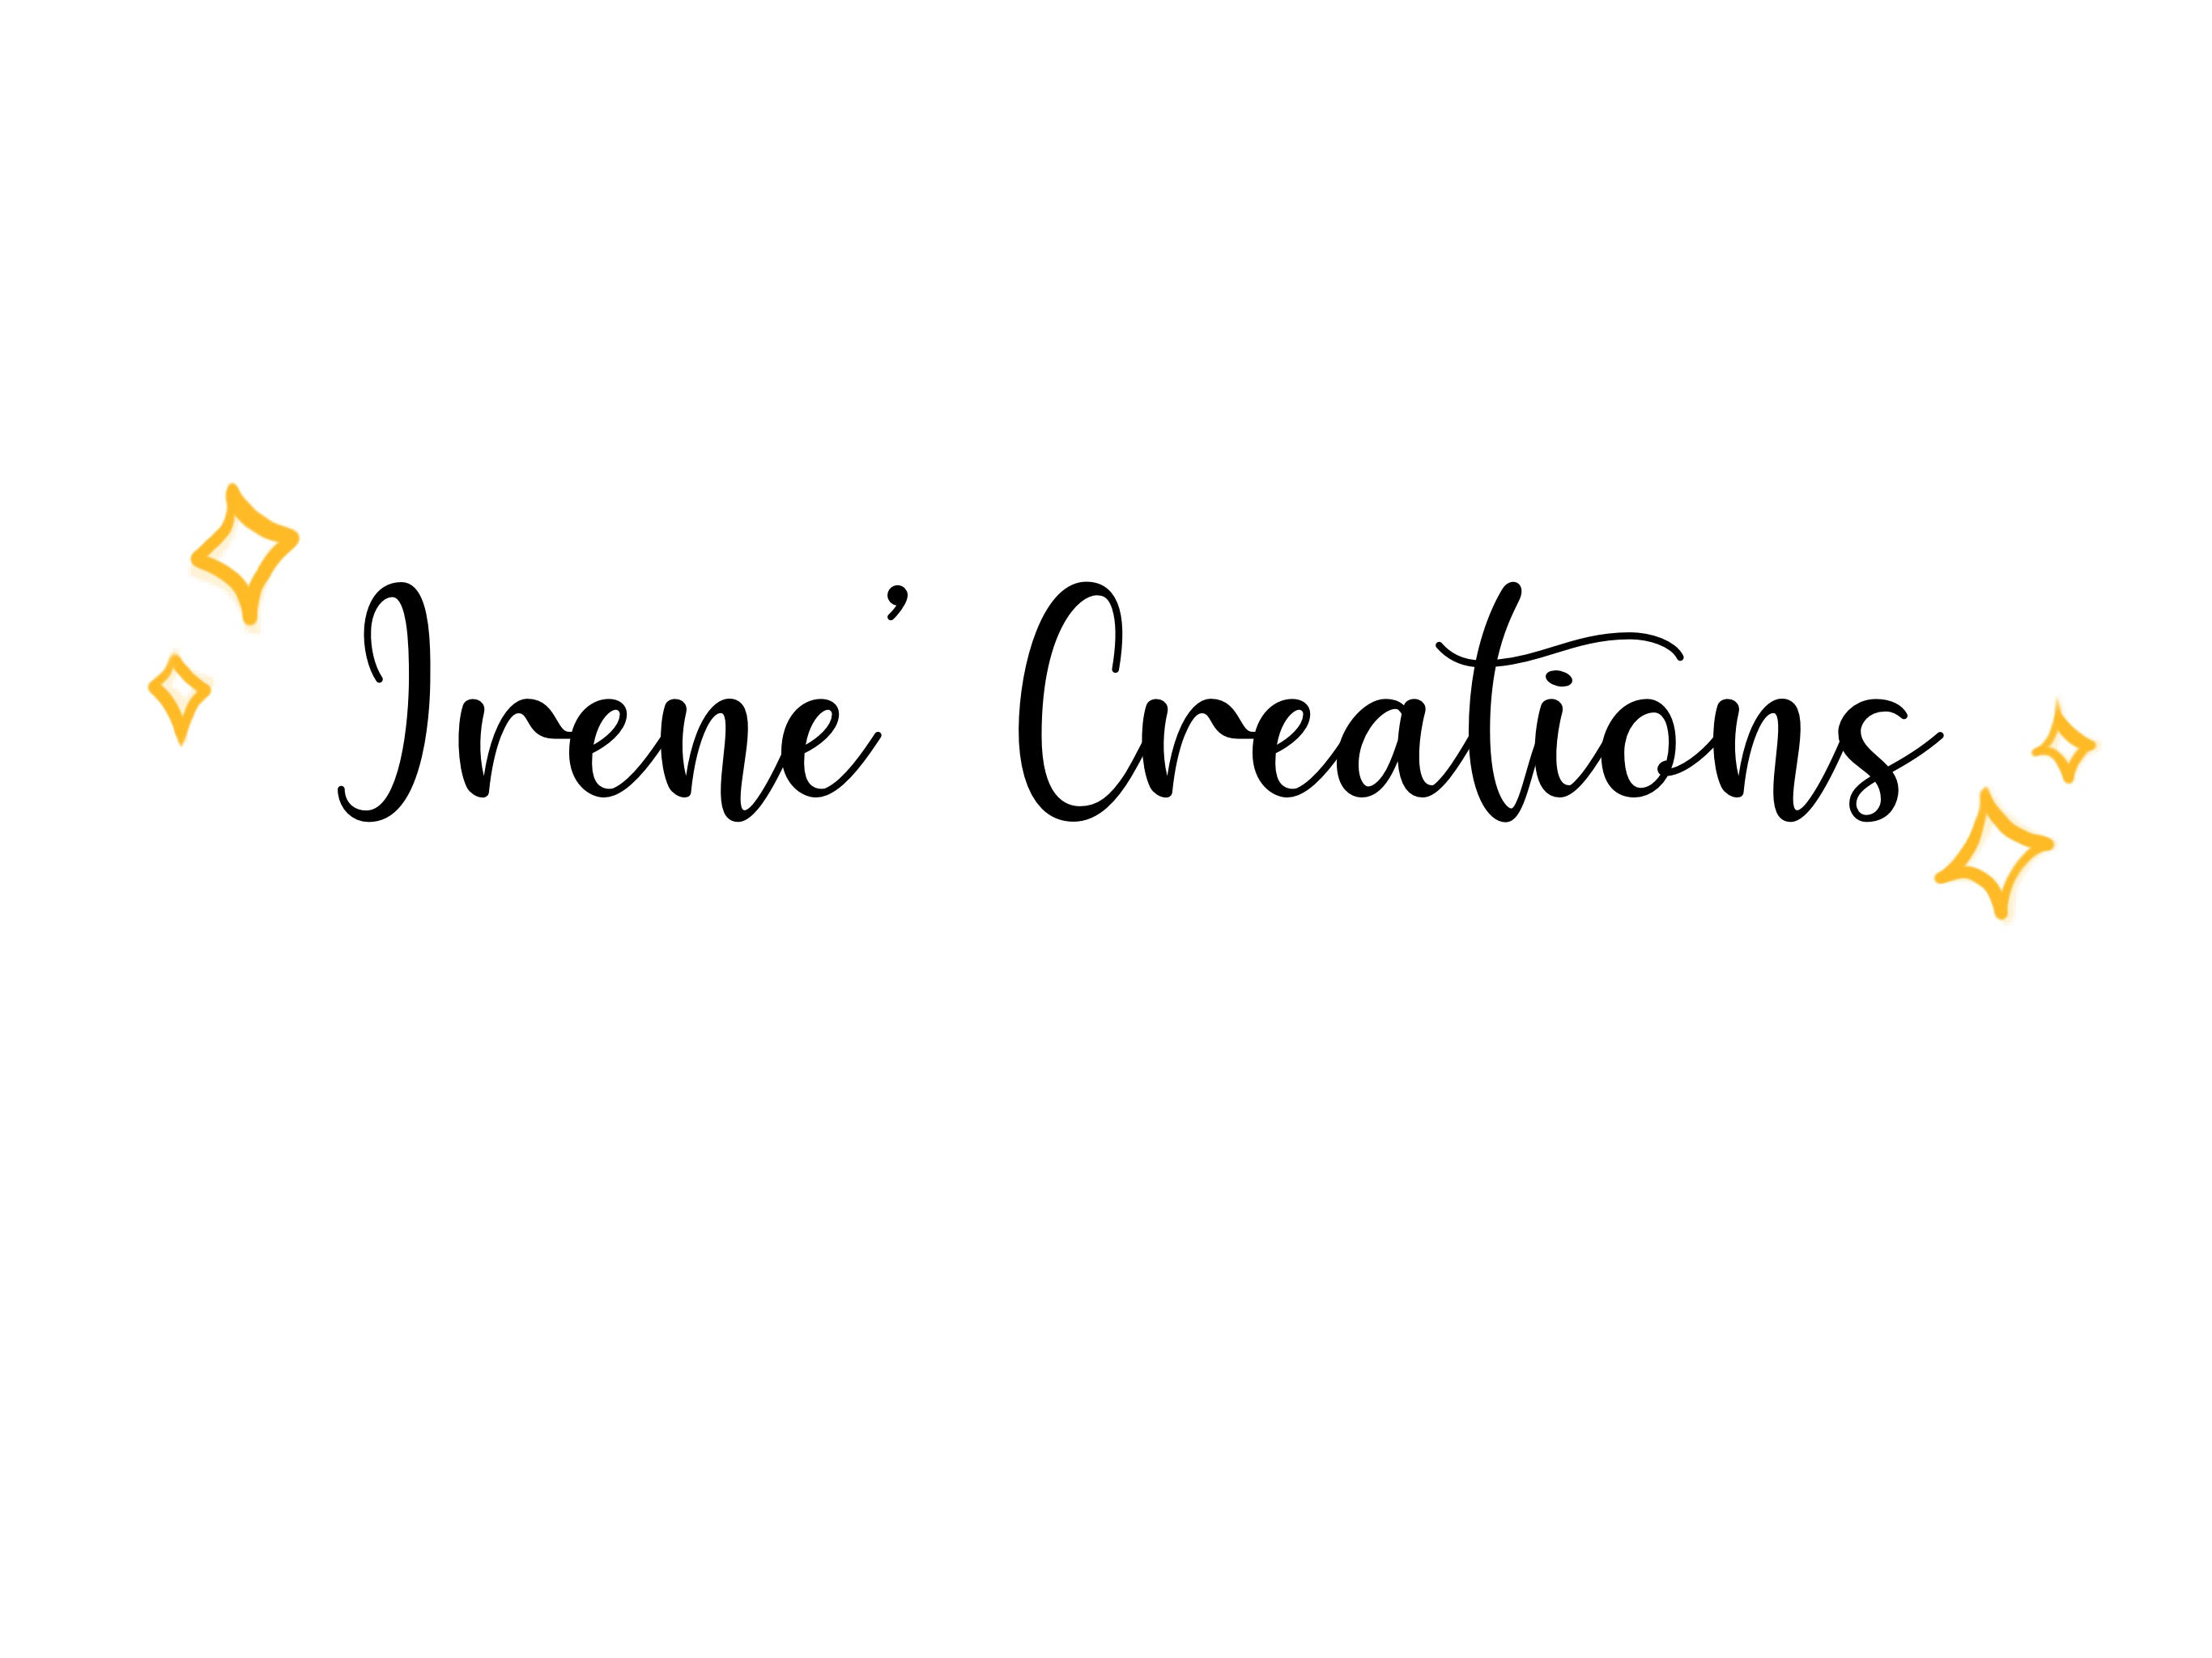 Irene' Creations